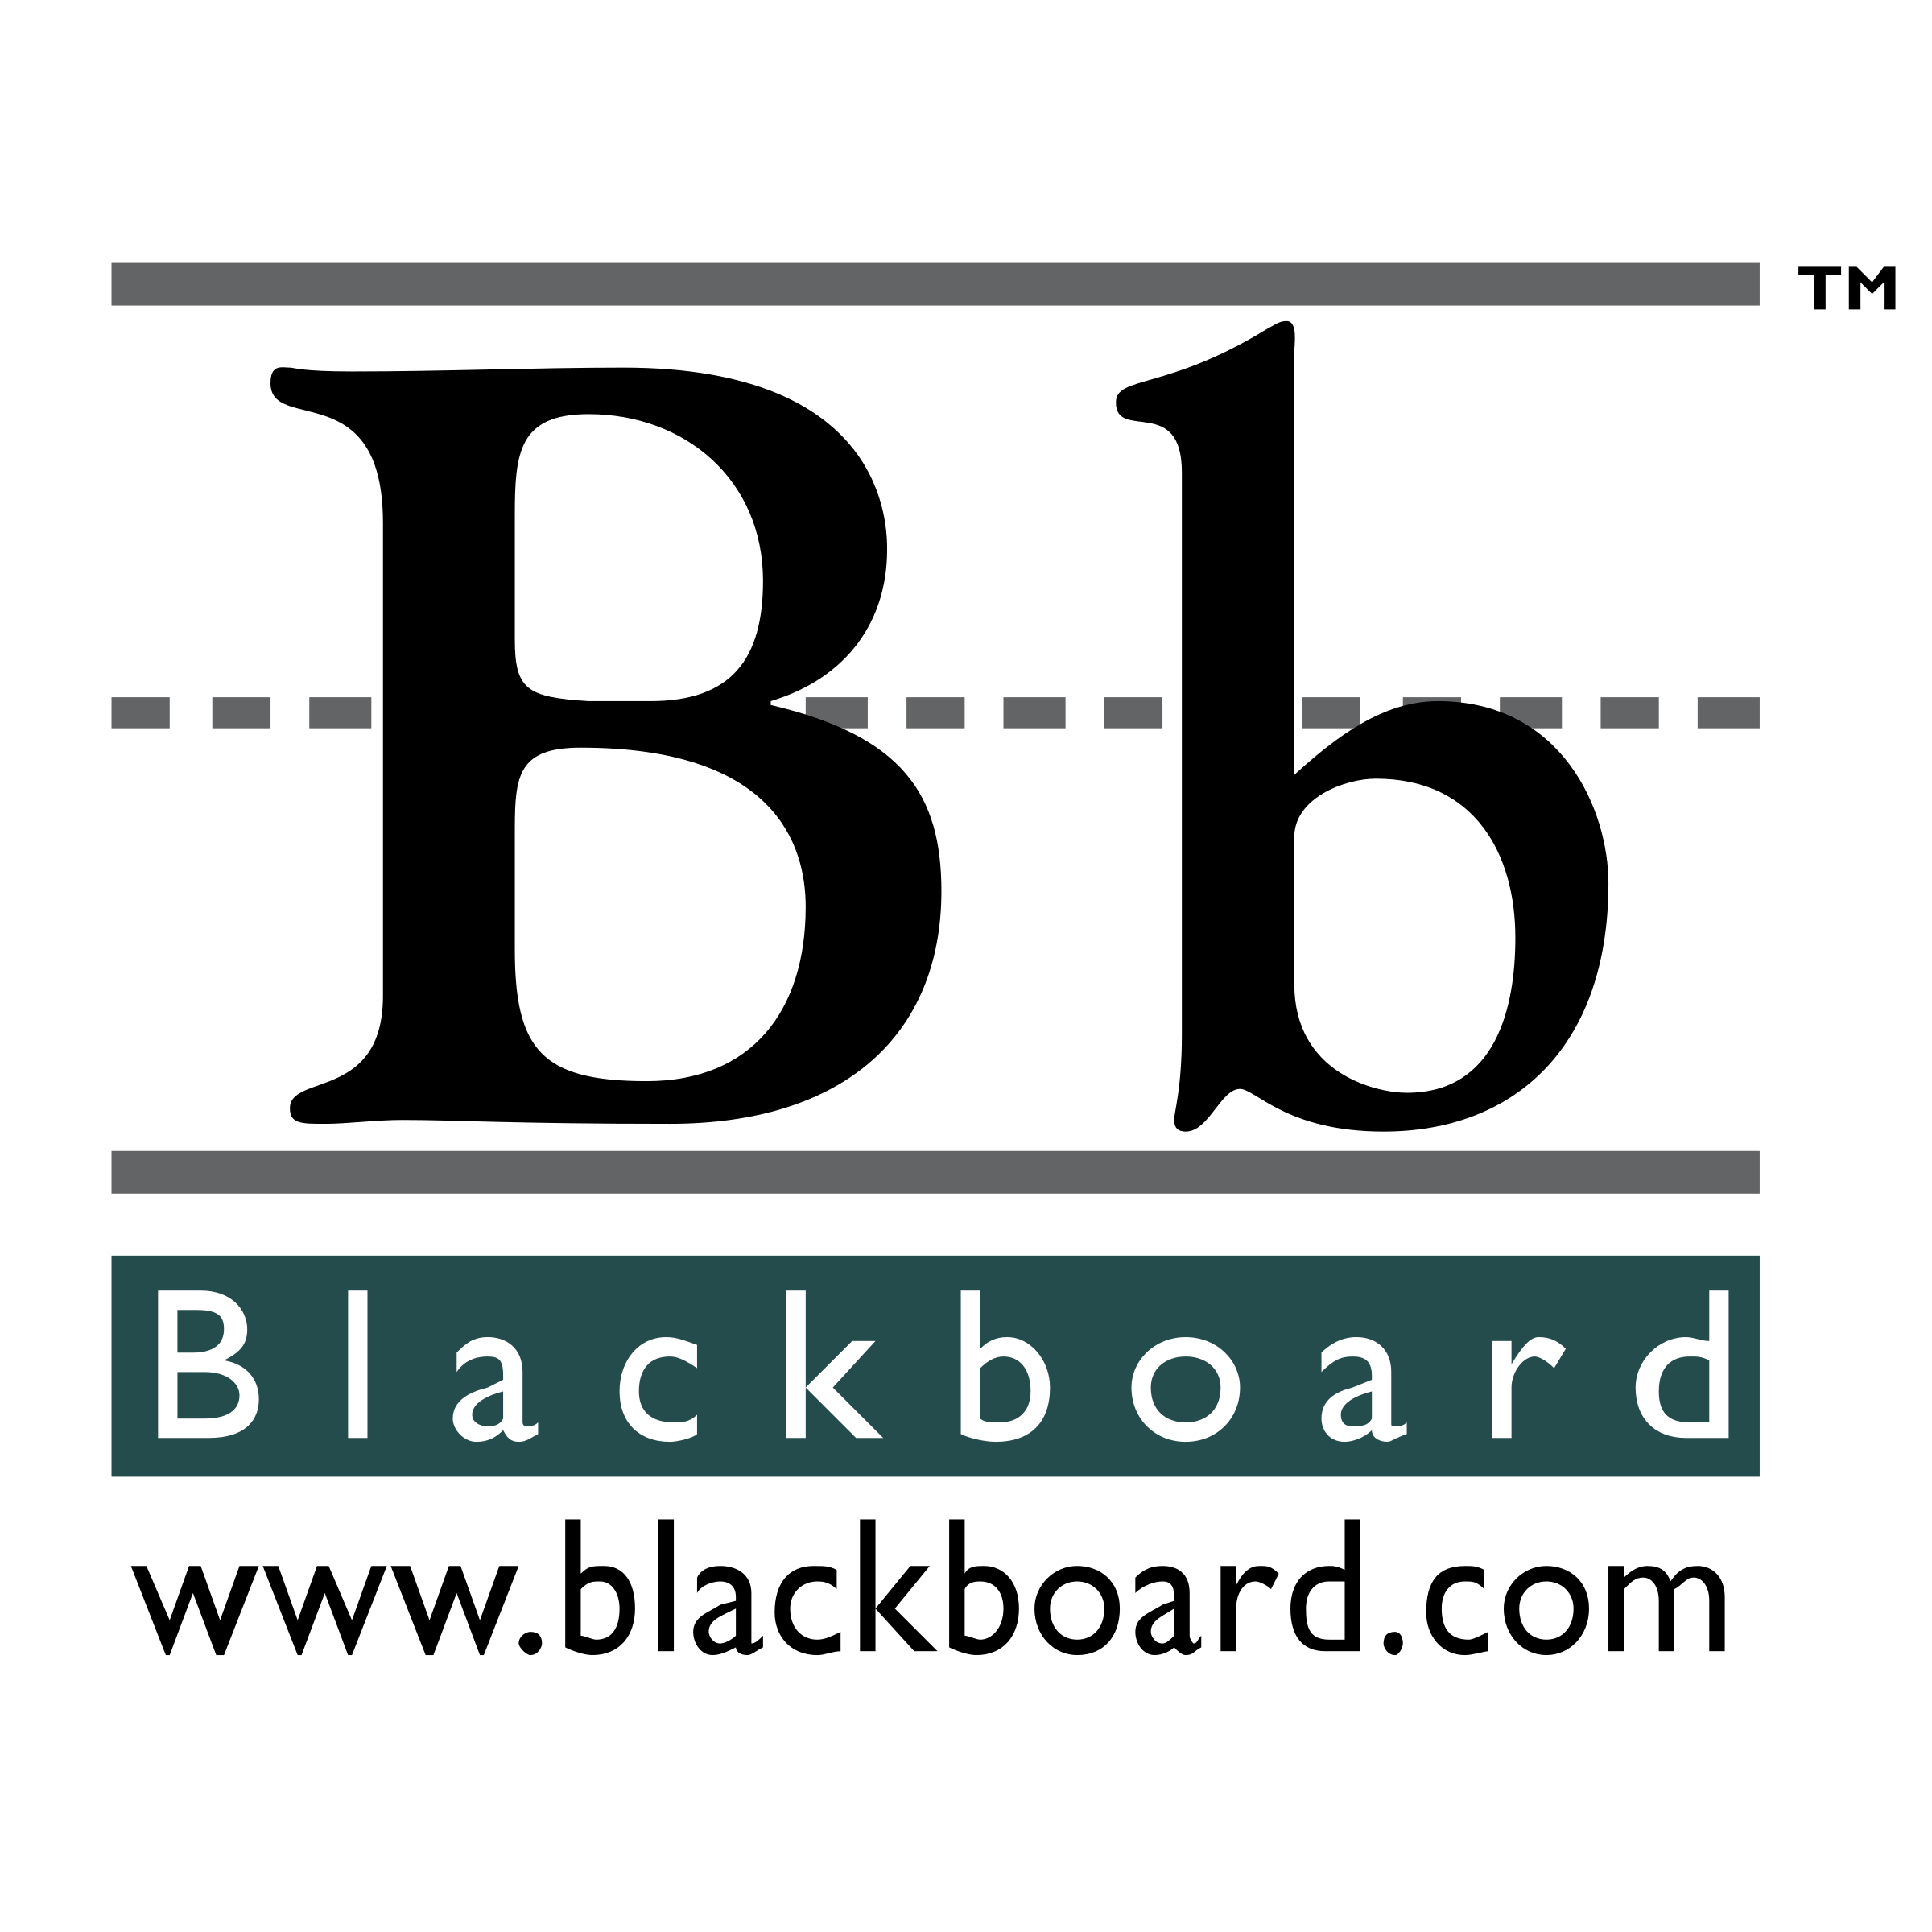 Blackboard Logo - Blackboard Logo PNG Transparent & SVG Vector - Freebie Supply